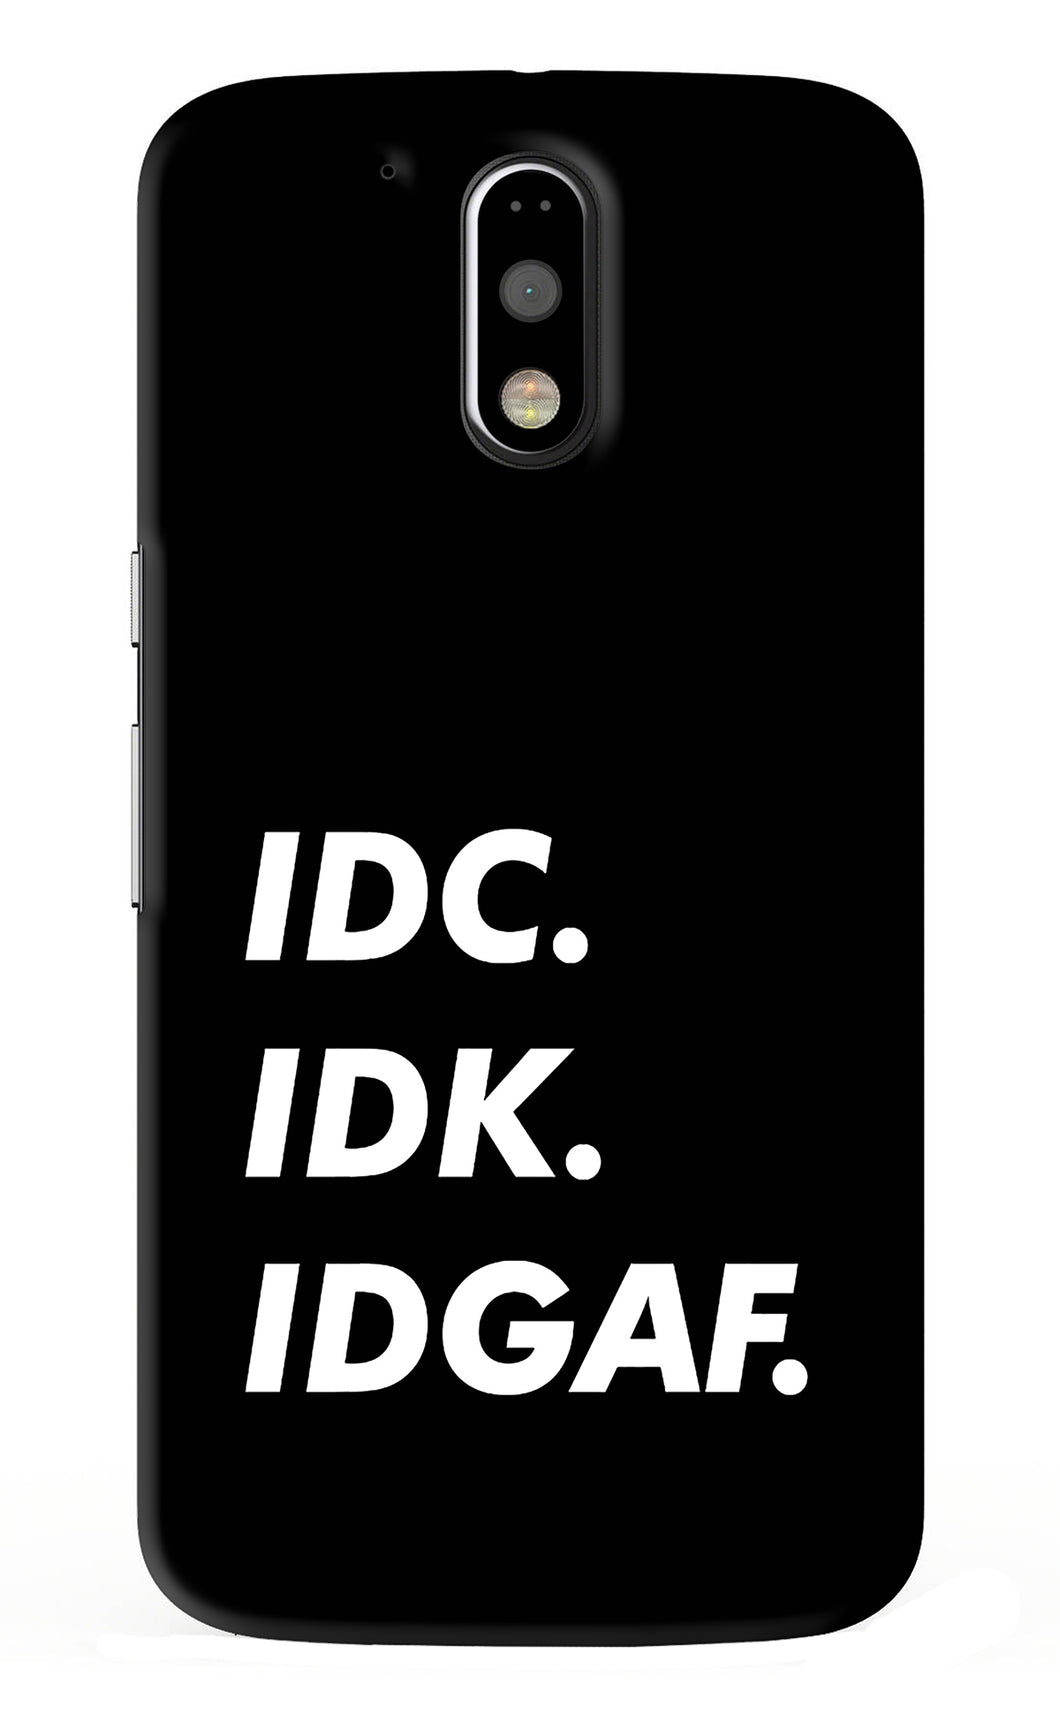 Idc Idk Idgaf Motorola Moto G4 Back Skin Wrap